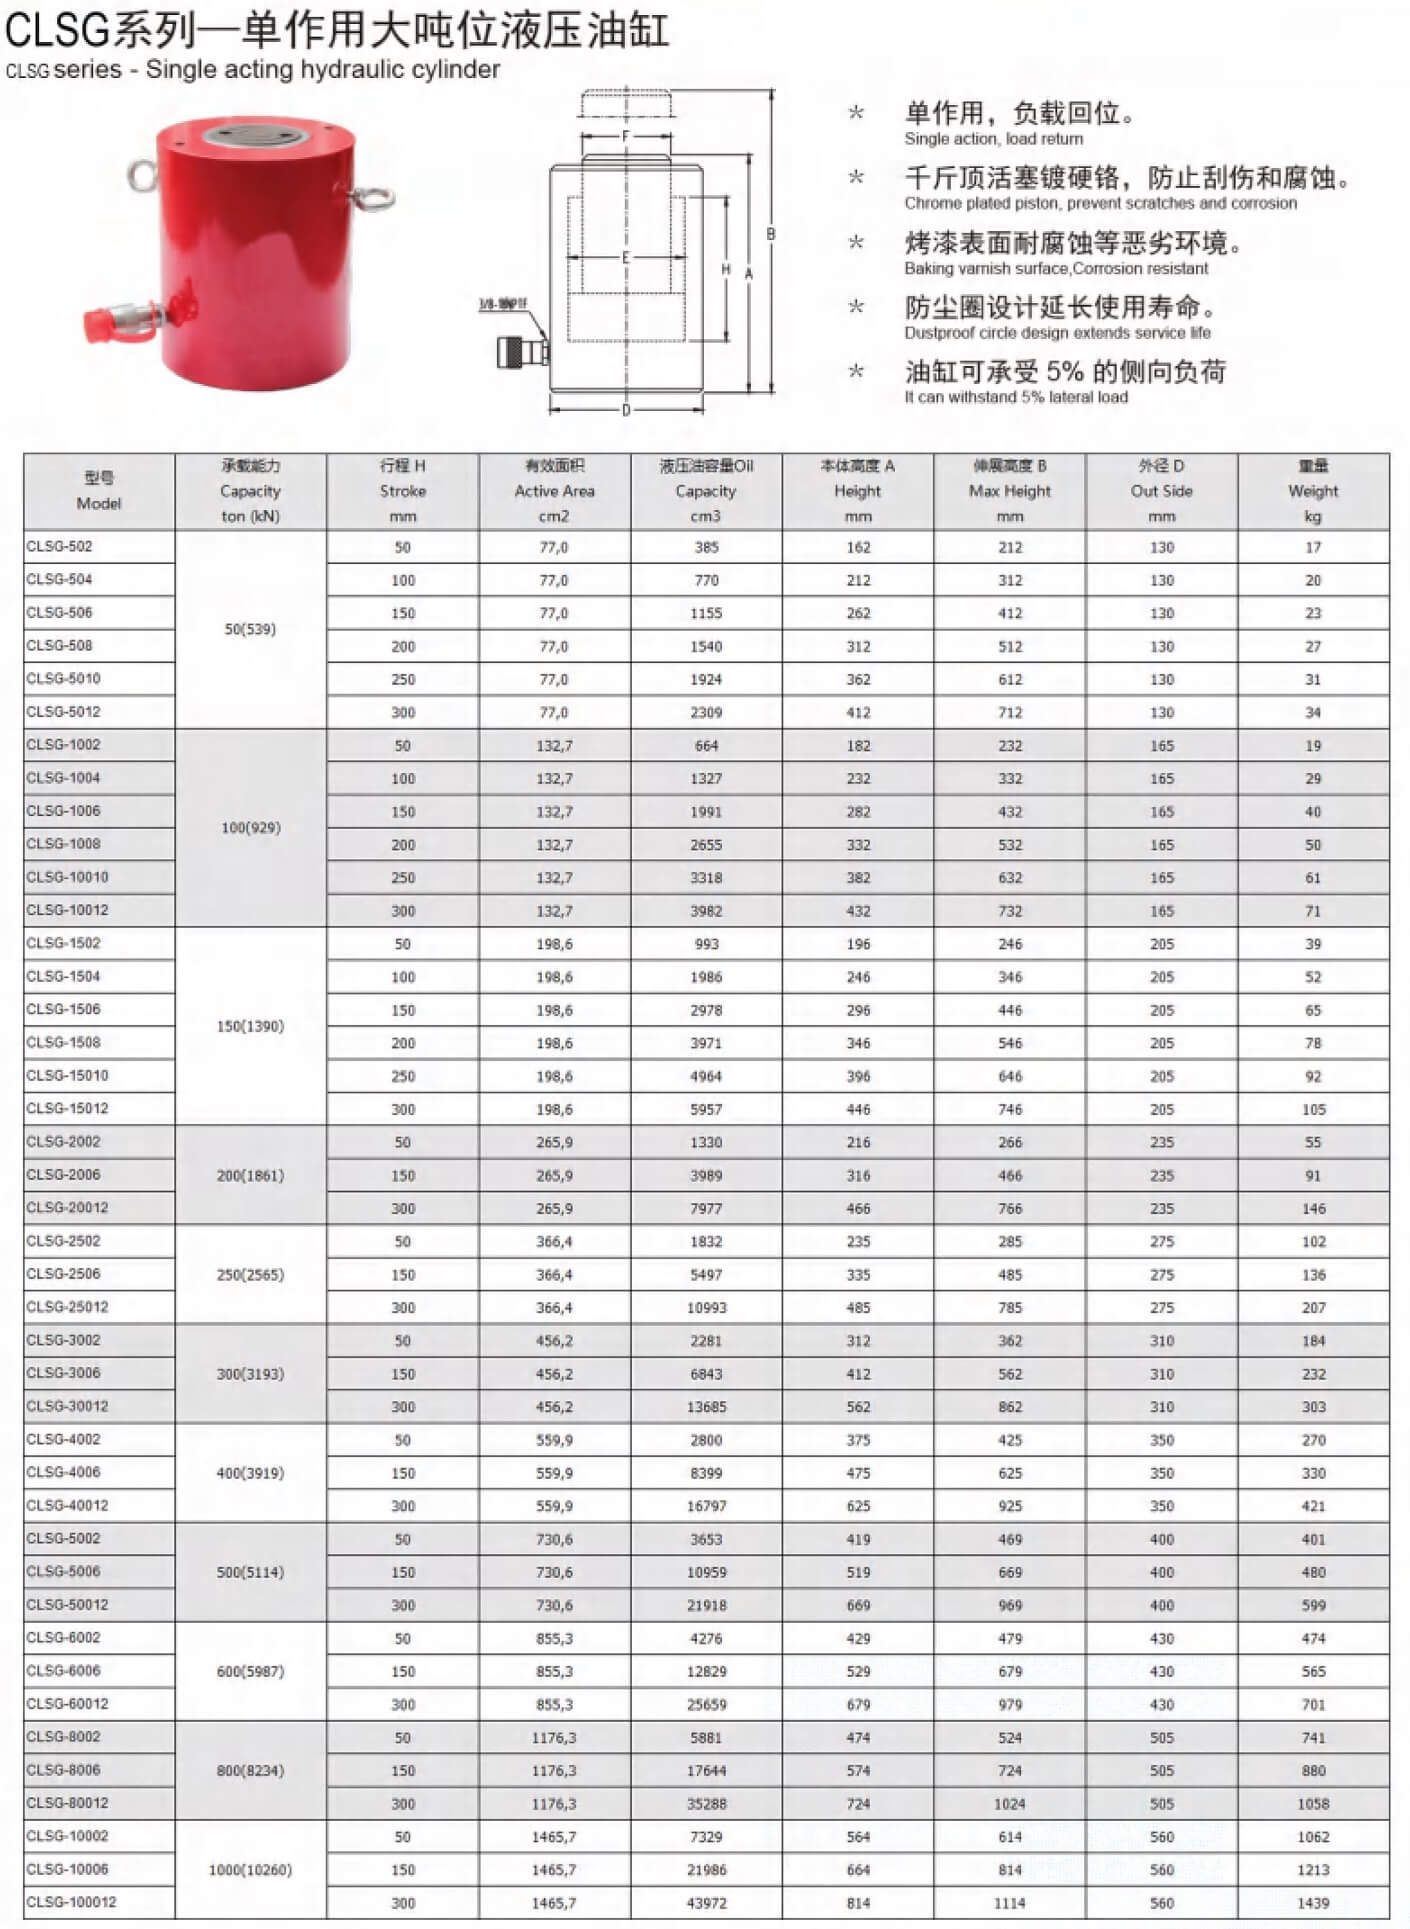 GLSG series single acting hydraulic cylinder (1).jpg